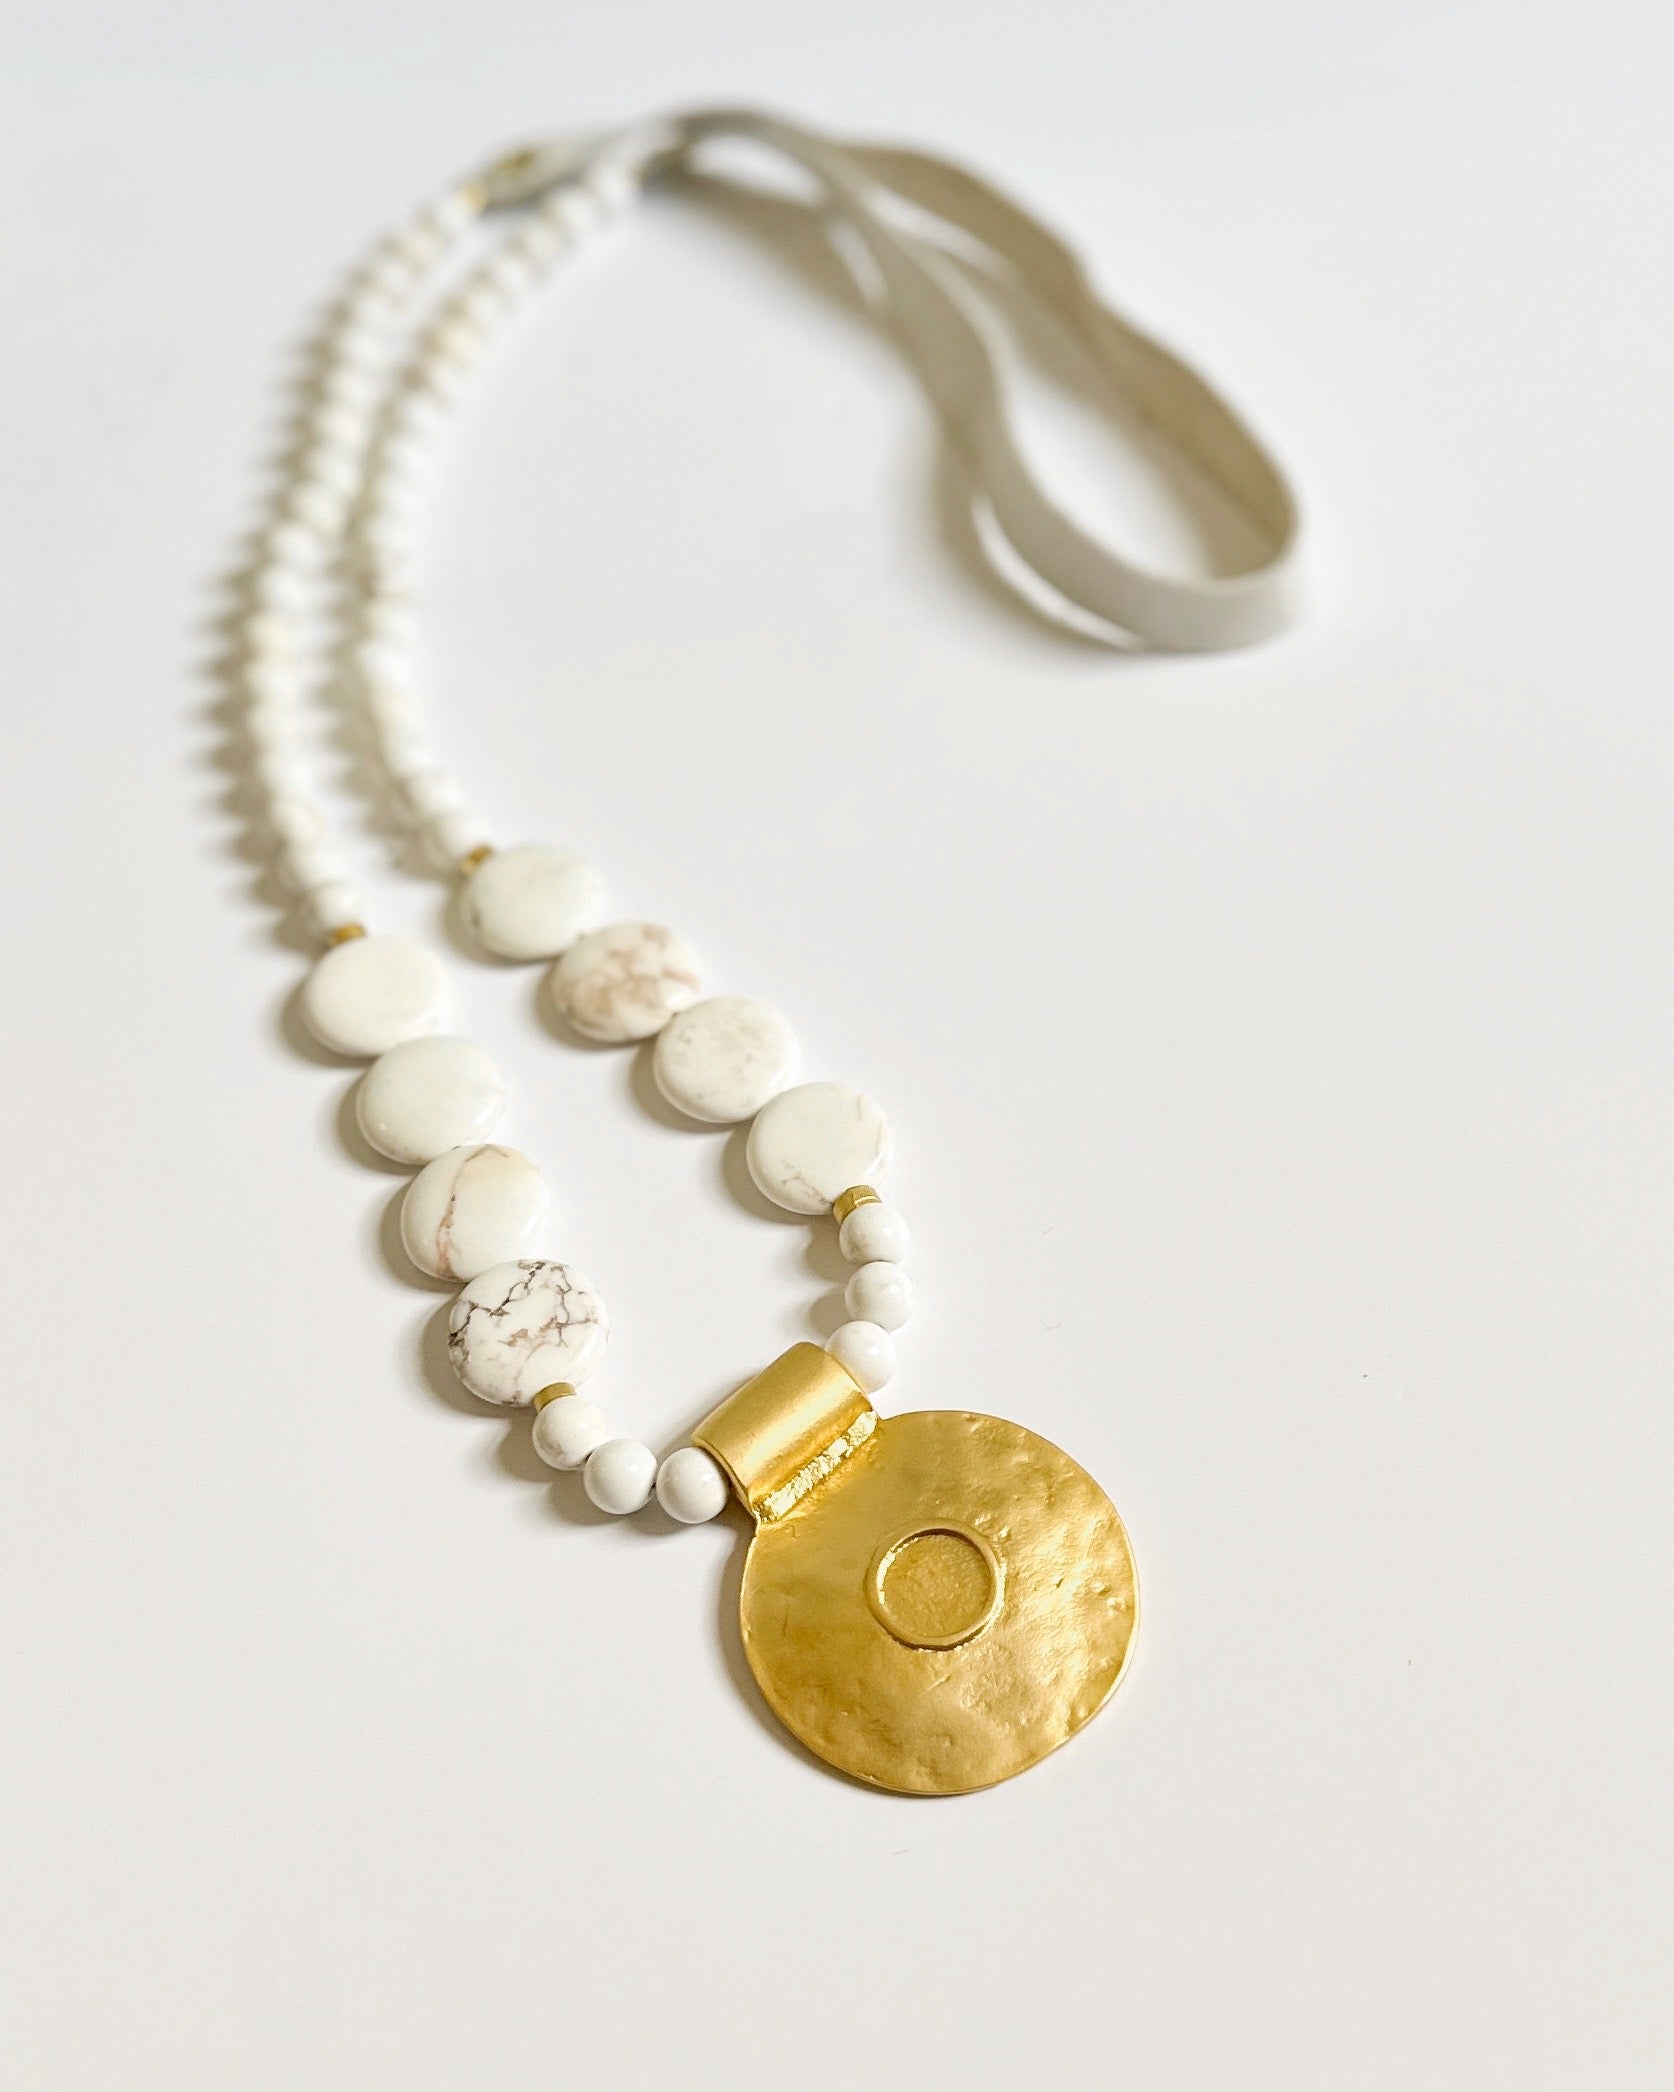 Gold medallion + White turquoise necklace